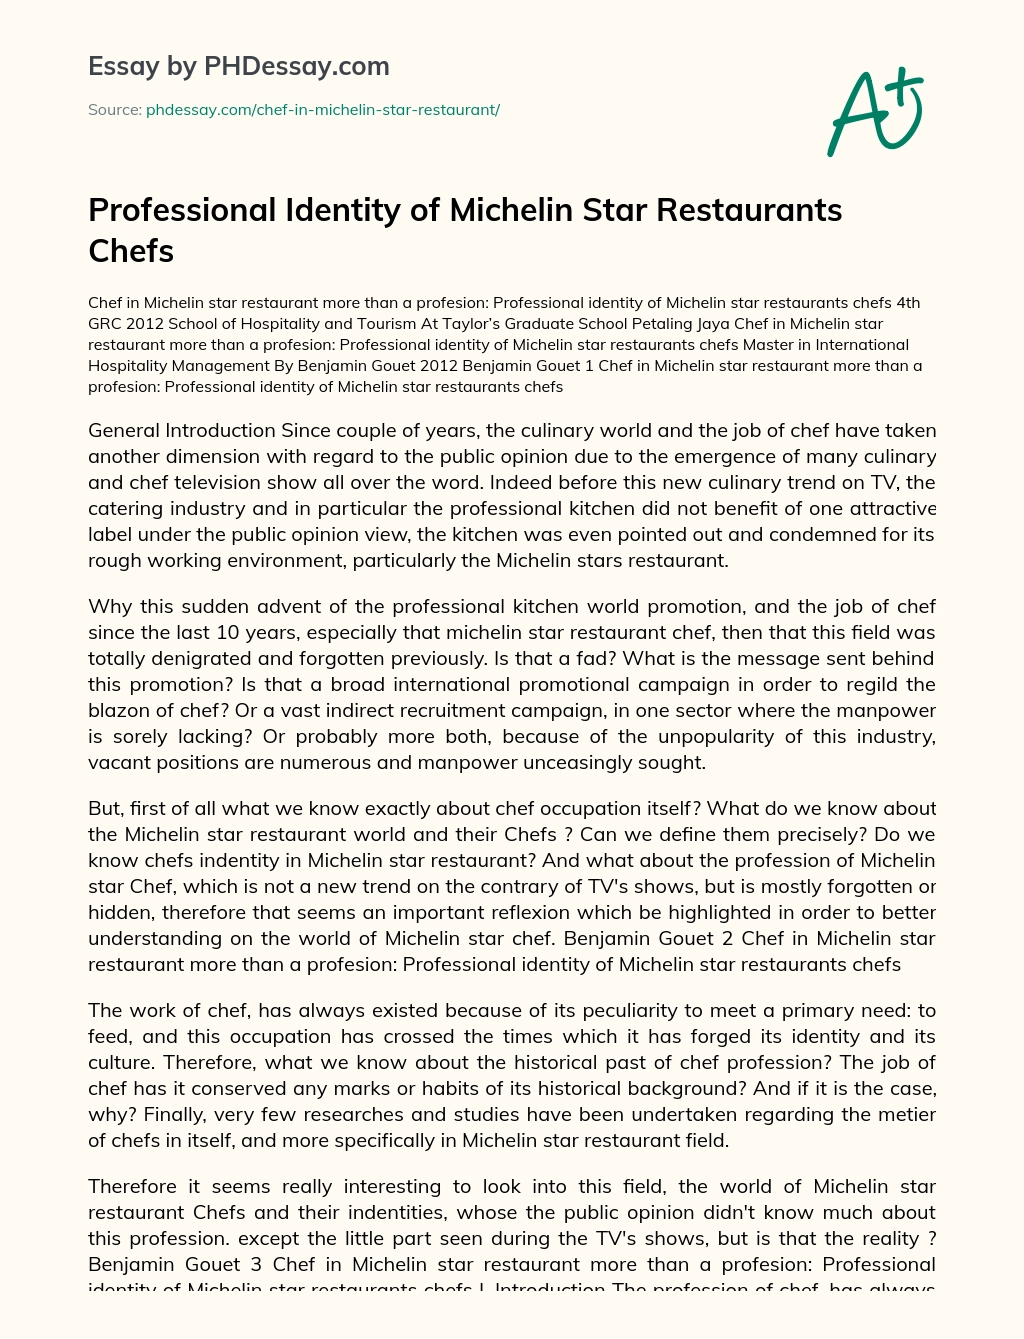 Professional Identity of Michelin Star Restaurants Chefs essay